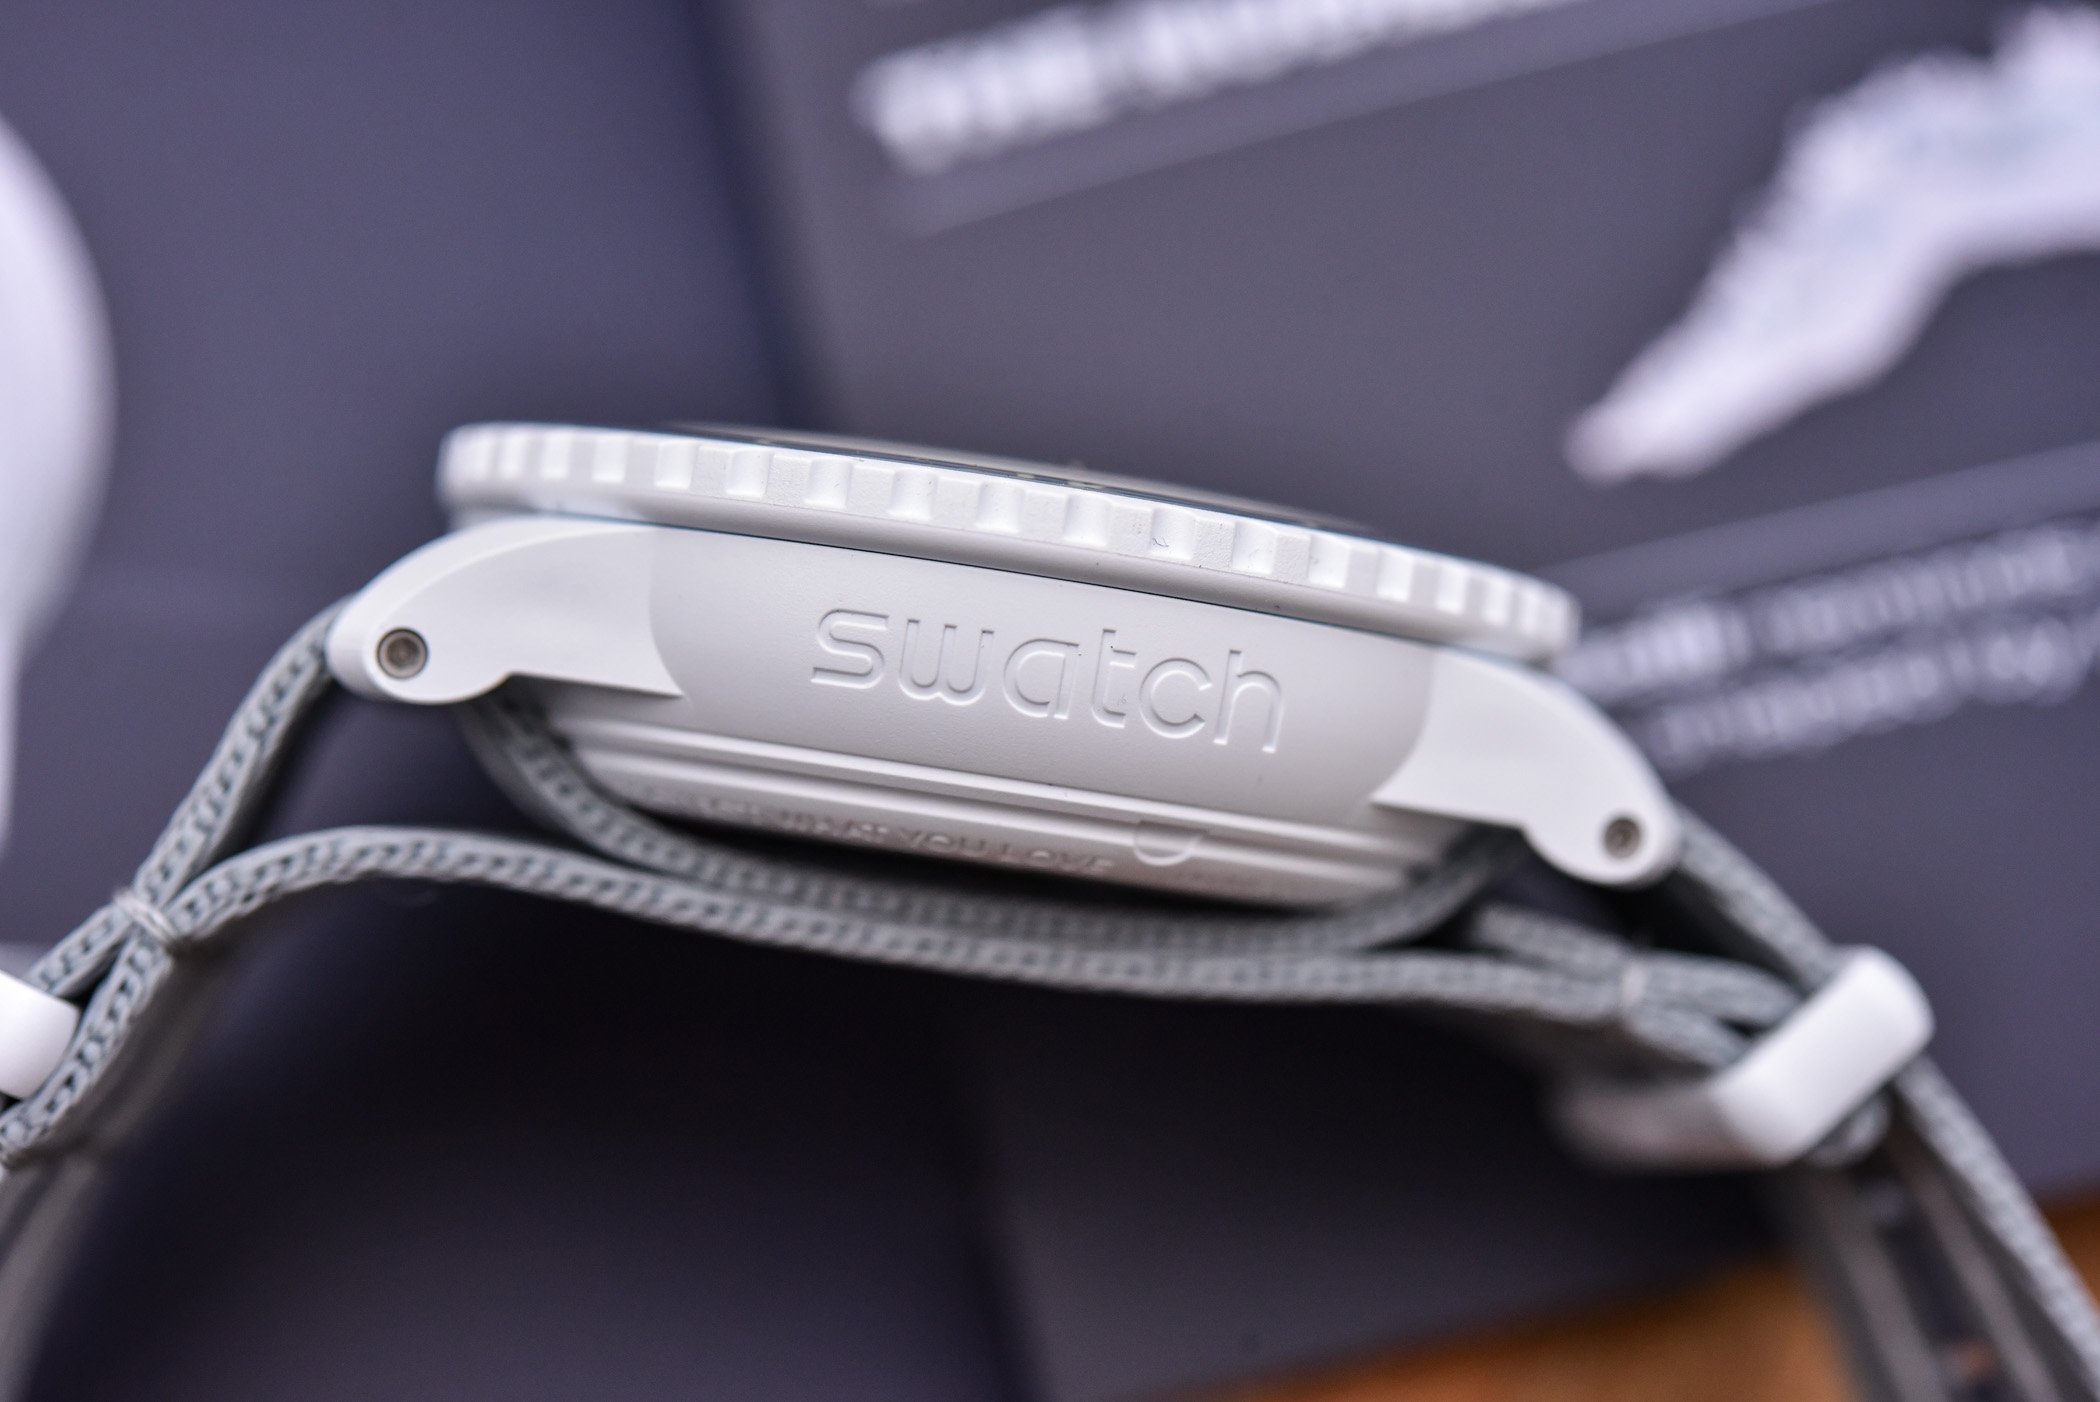 Swatch x Blancpain Blancpain Bioceramic Scuba Fifty Fathoms - opinion review